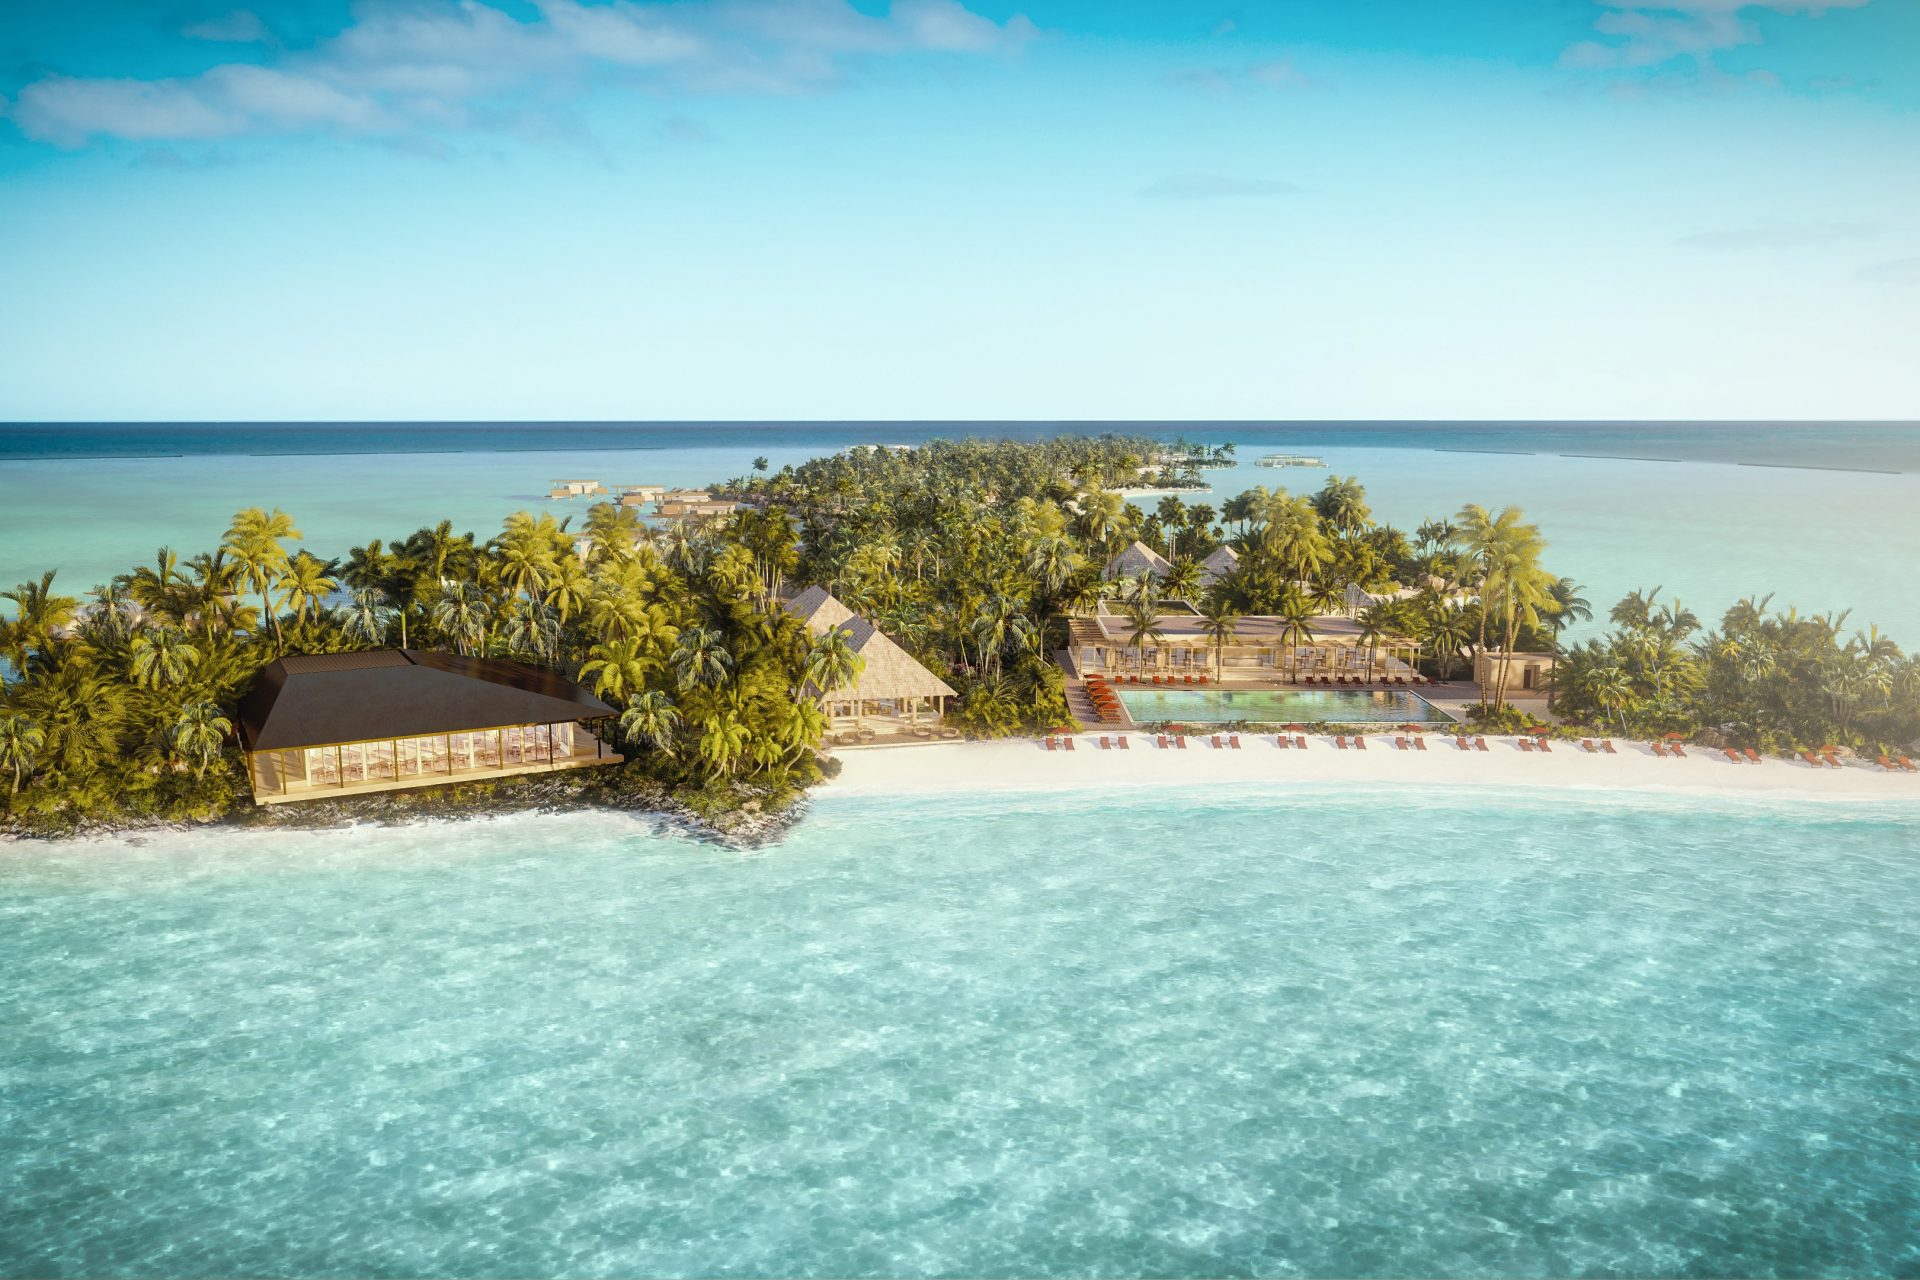 Bulgari Hotels & Resorts makes a move on the Maldives